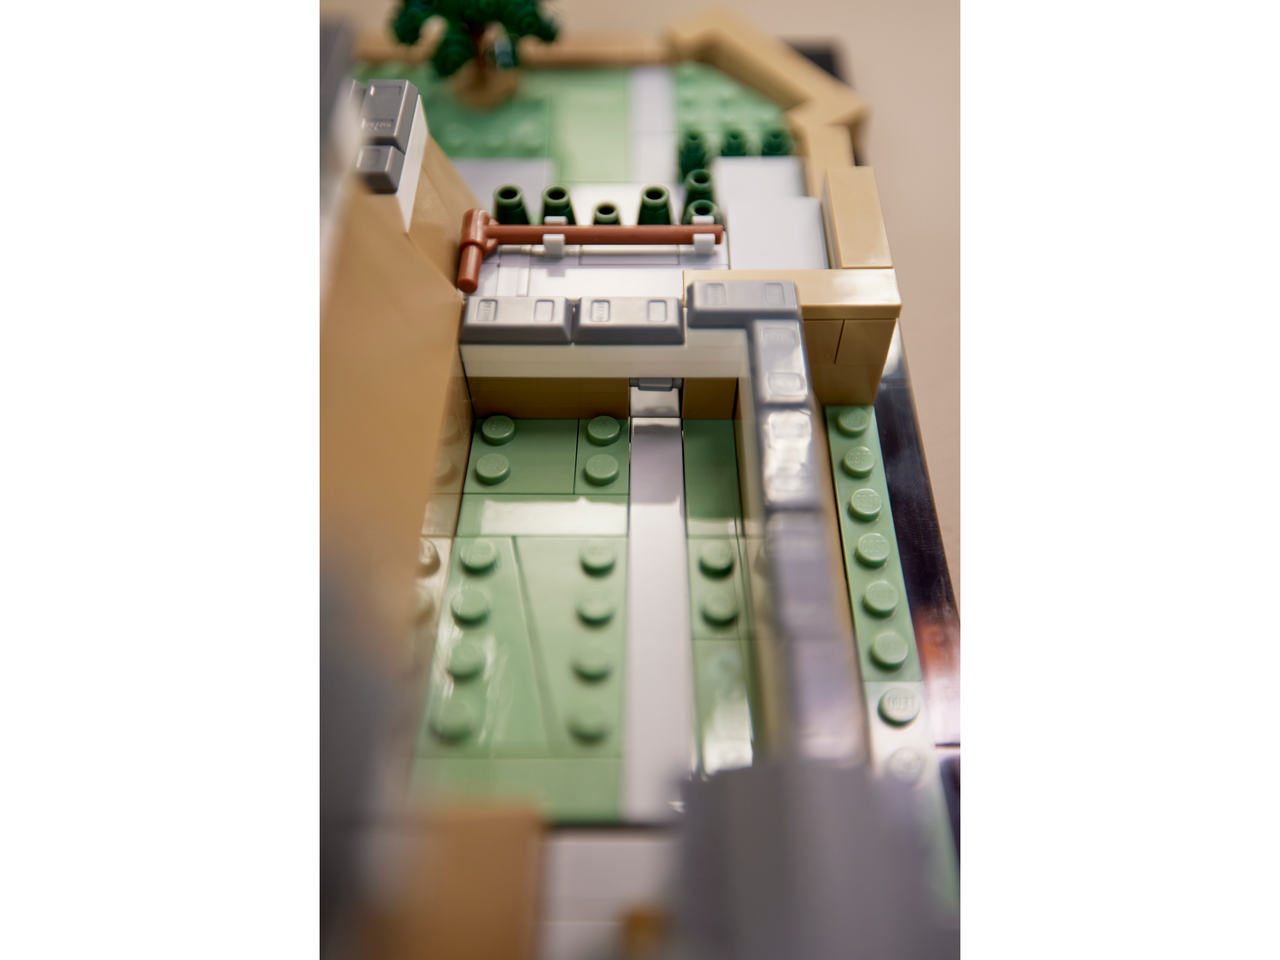 Lego Architecture Himeji Castle